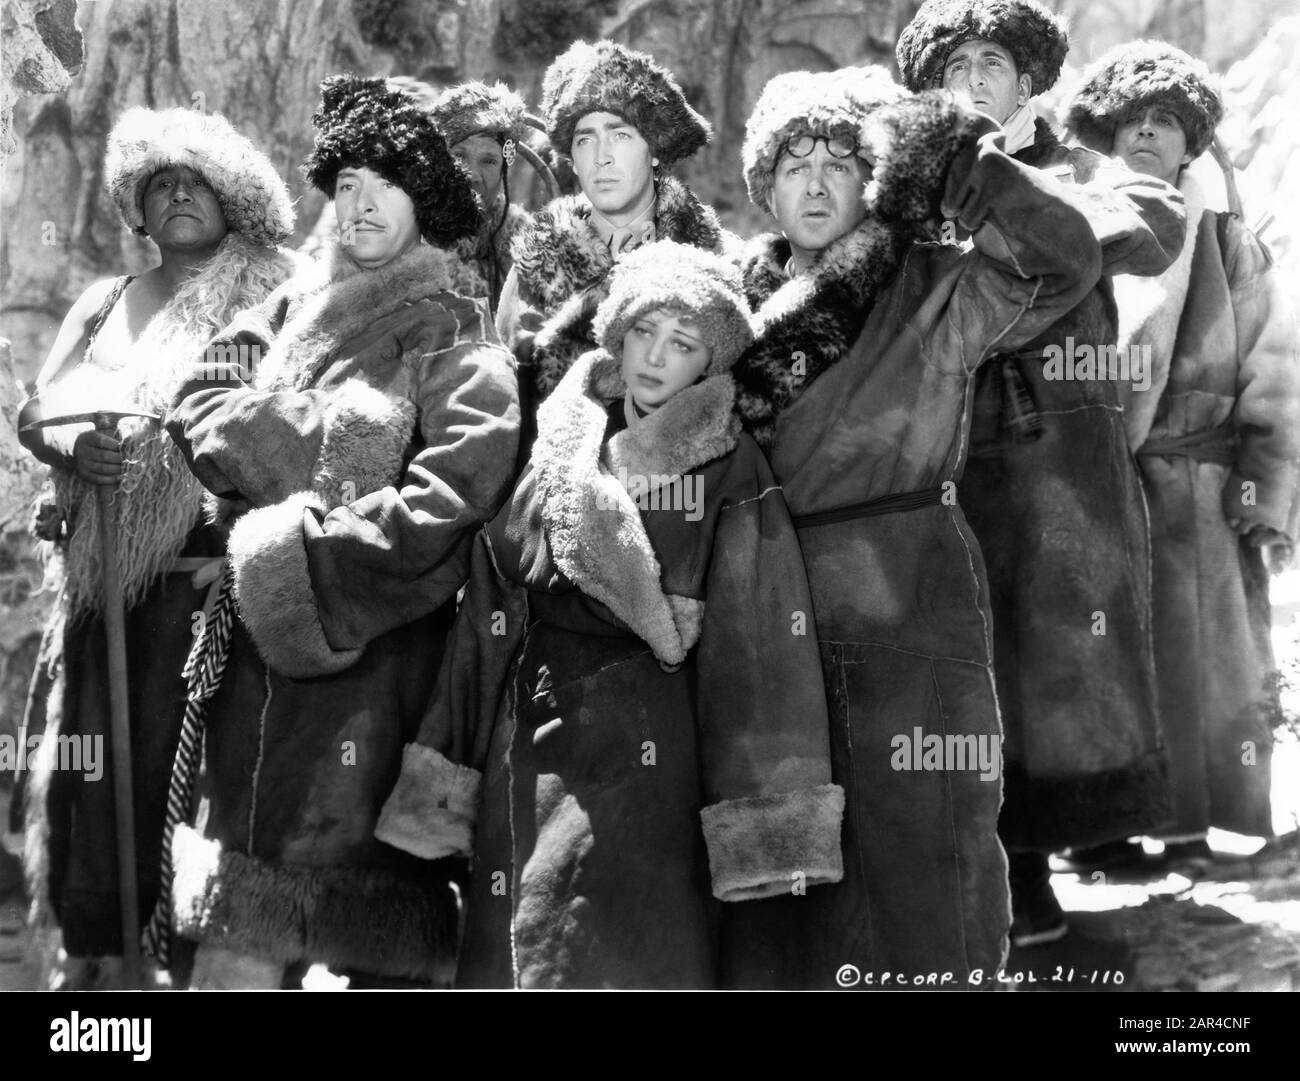 Ronald COLMAN JOHN HOWARD ISABEL JEWELL THOMAS MITCHELL e EDWARD EVERETT HORTON con i portieri tibetani primo sguardo di Shangri - la in LOST HORIZON 1937 regista FRANK CAPRA romanzo JAMES HILTON sceneggiatura ROBERT RISKIN Columbia Pictures Foto Stock